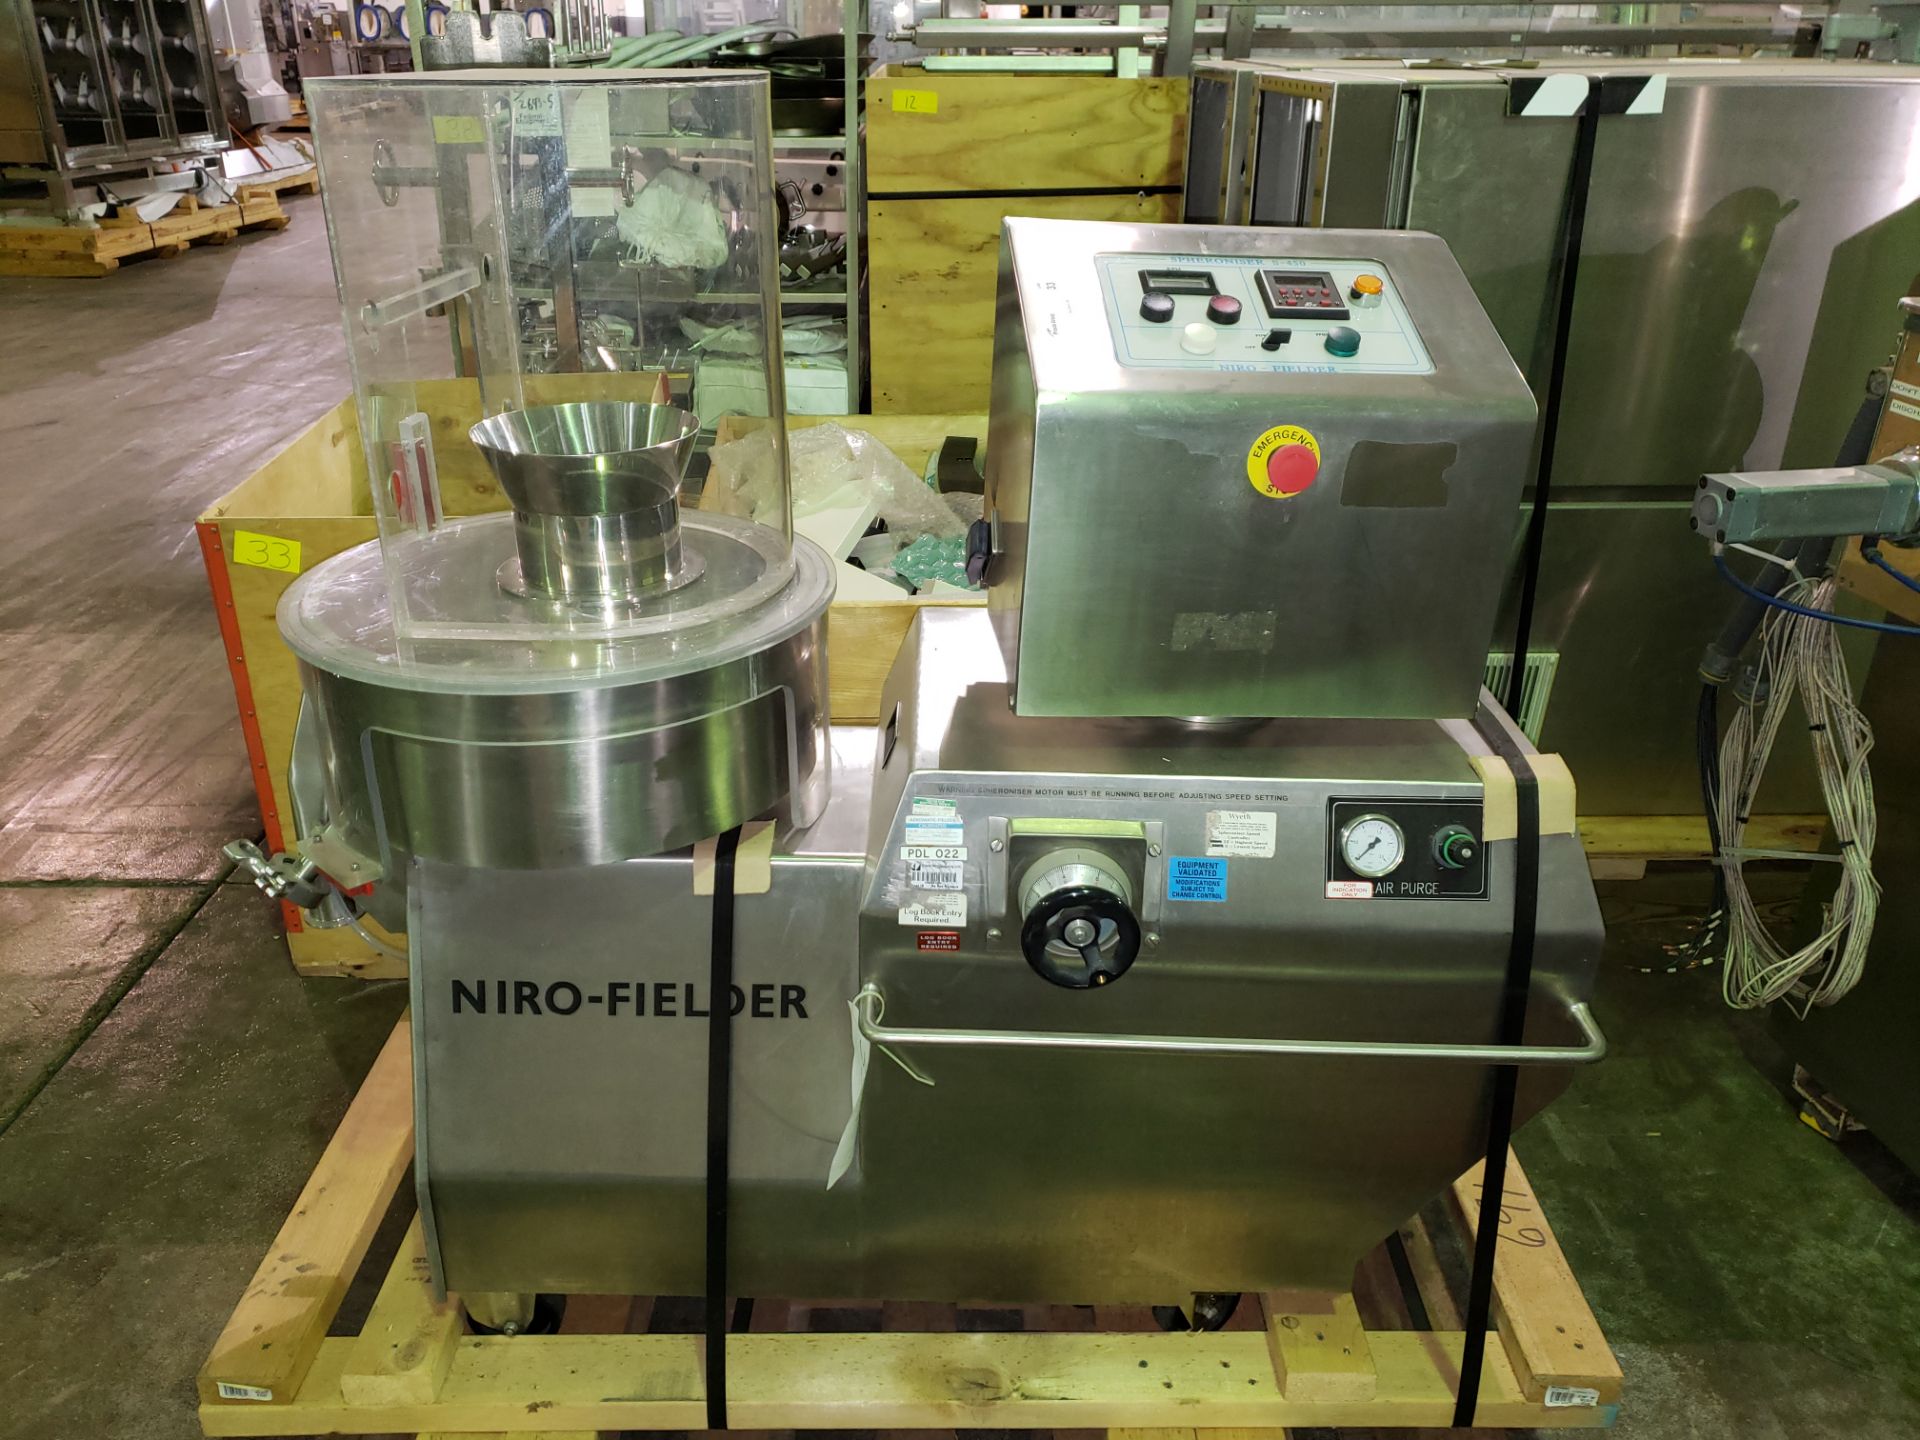 Niro Fielder NICA spheronizer, model S-450, stainless steel construction, 450mm diameter - Image 2 of 4